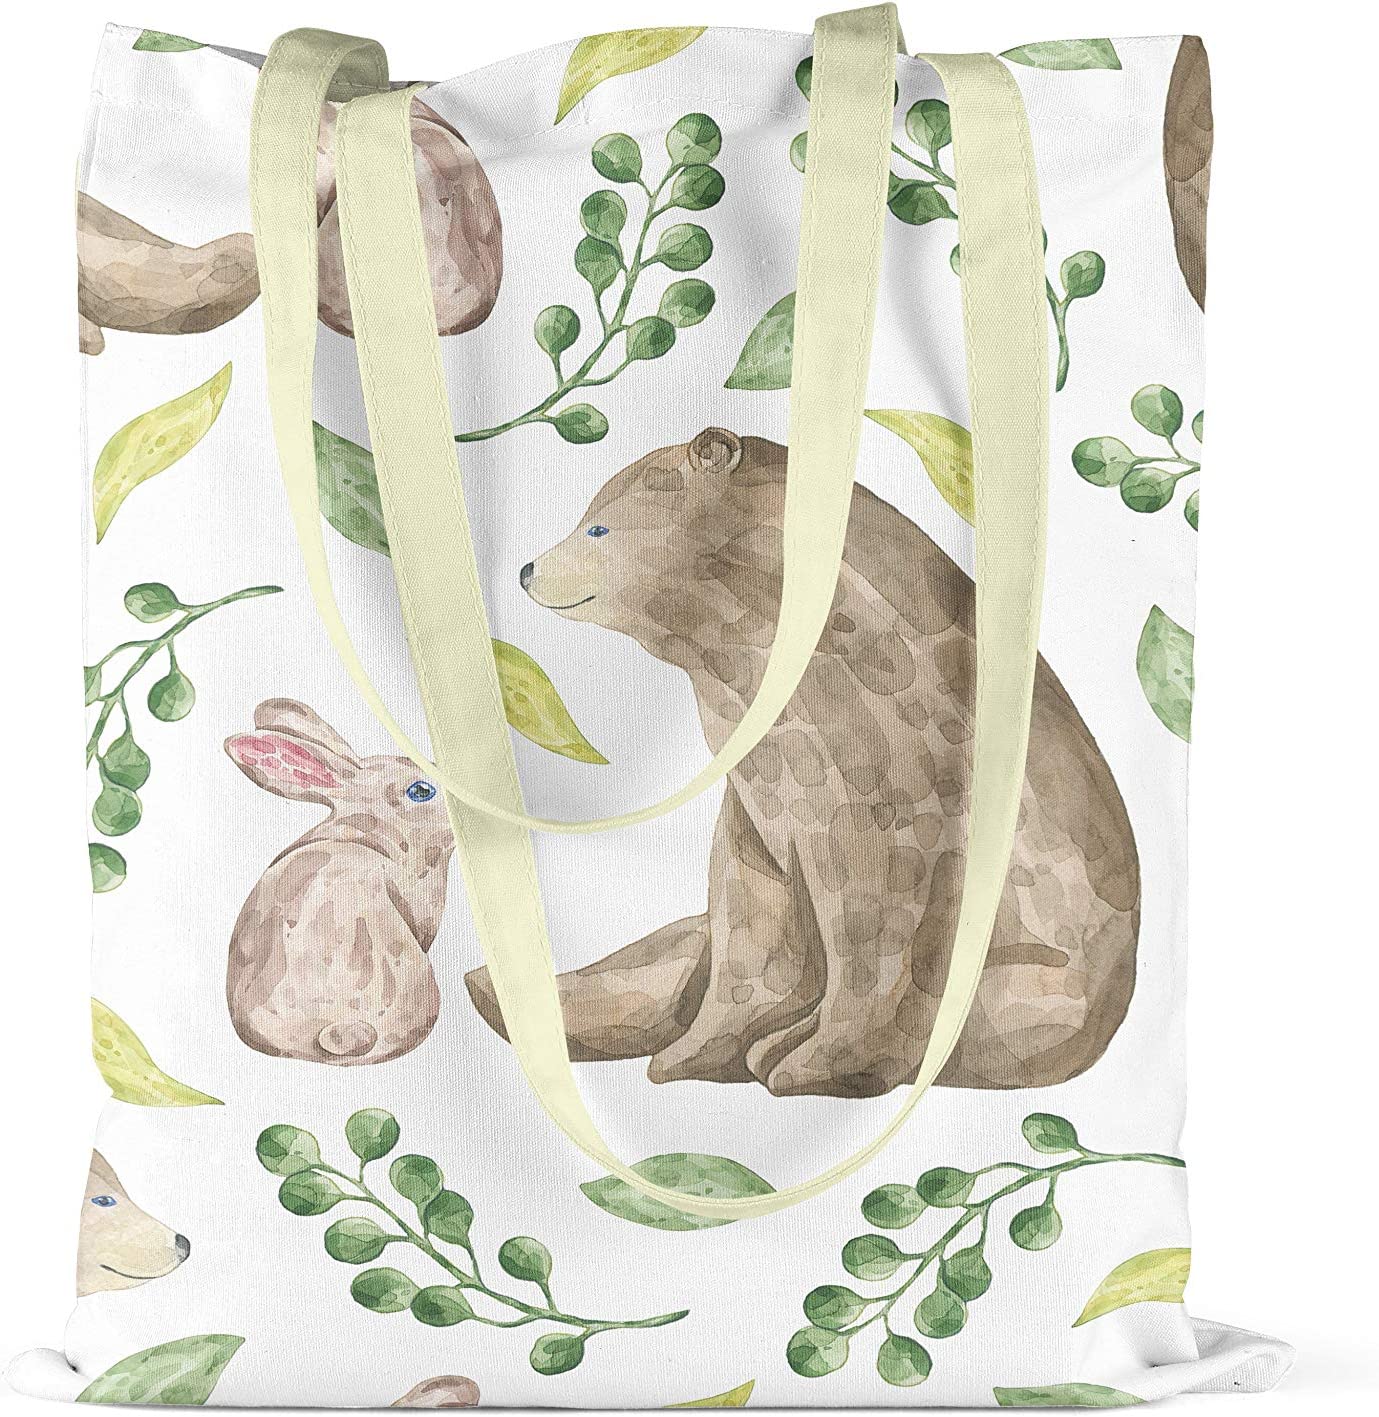 Bonamaison Animal & Floral Design Printed Cream Tote Bag 34 x 40cm RRP £5.99 CLEARANCE XL £3.99